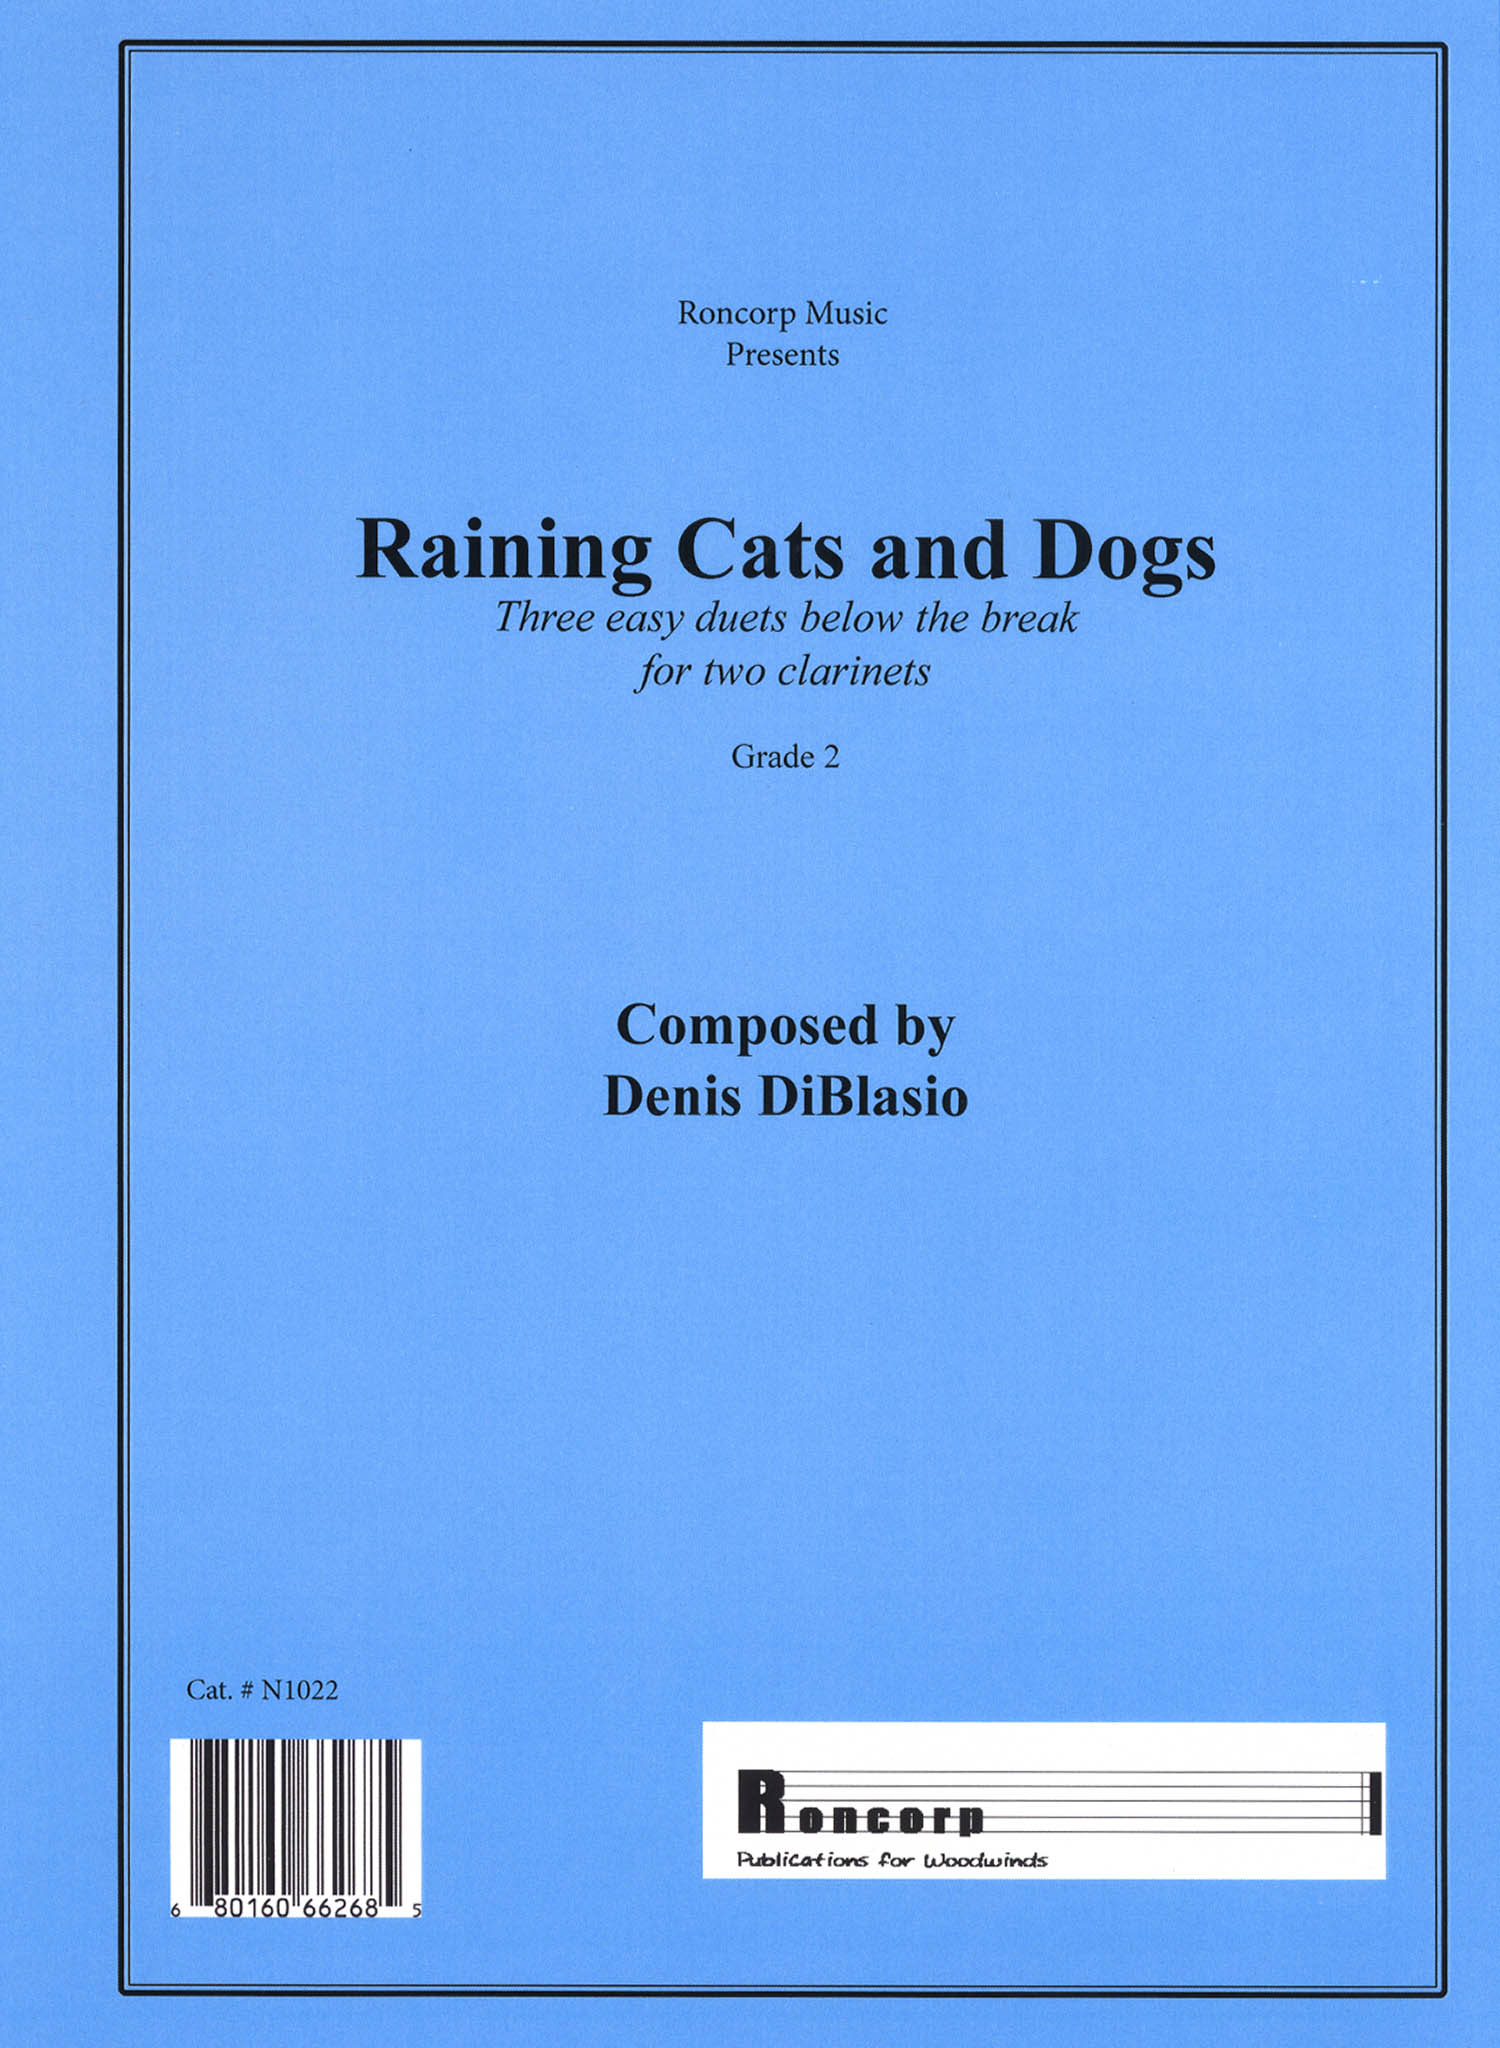 DiBlasio Raining Cats and Dogs clarinet duets beginner below the break